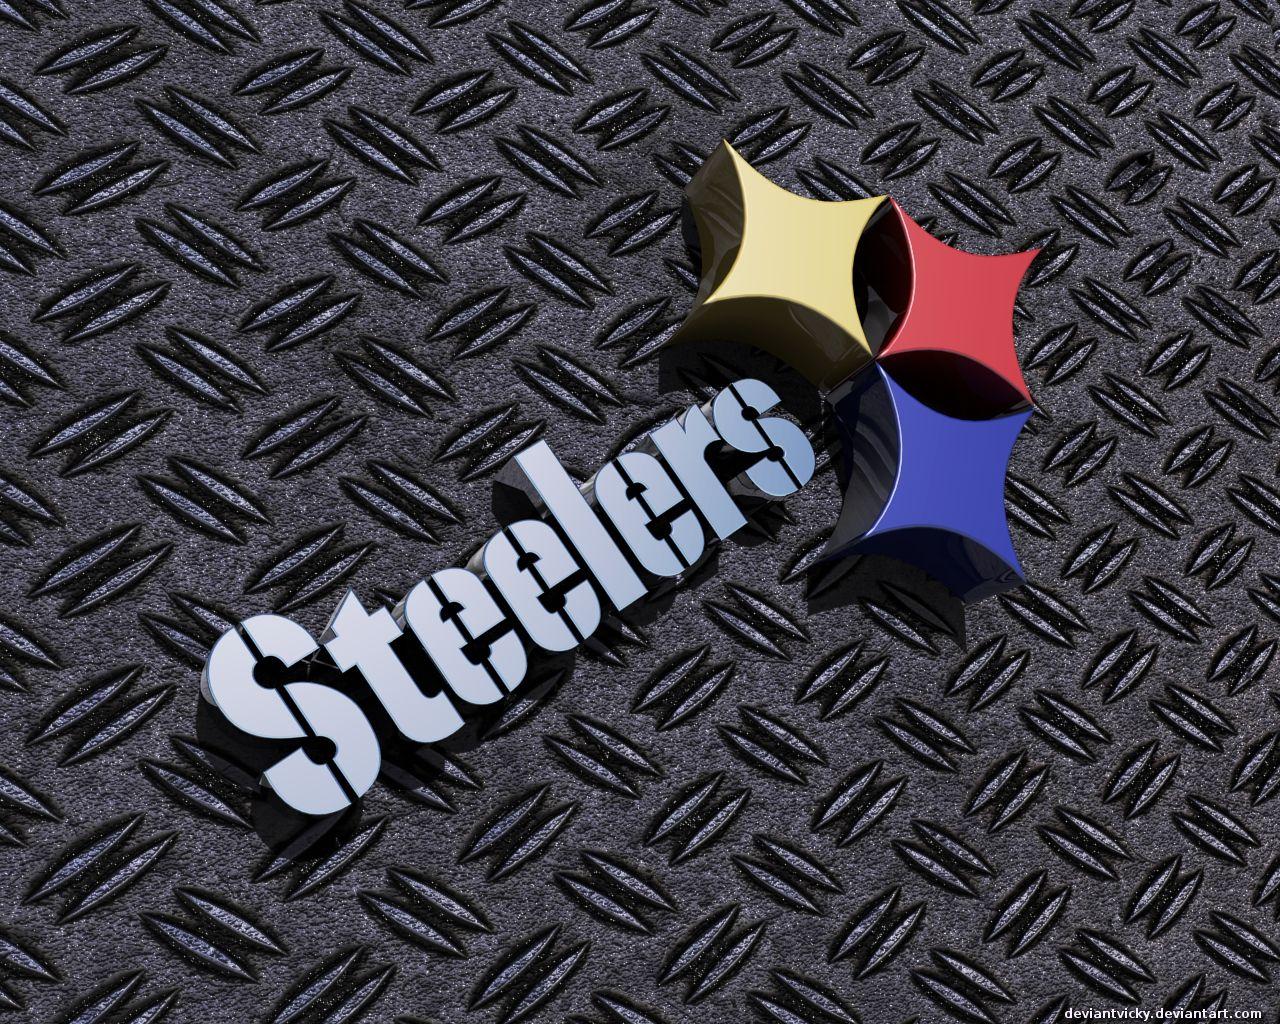 Steelers 3D Wallpaper. Steelers 3D (by * DeviantVicky ) x